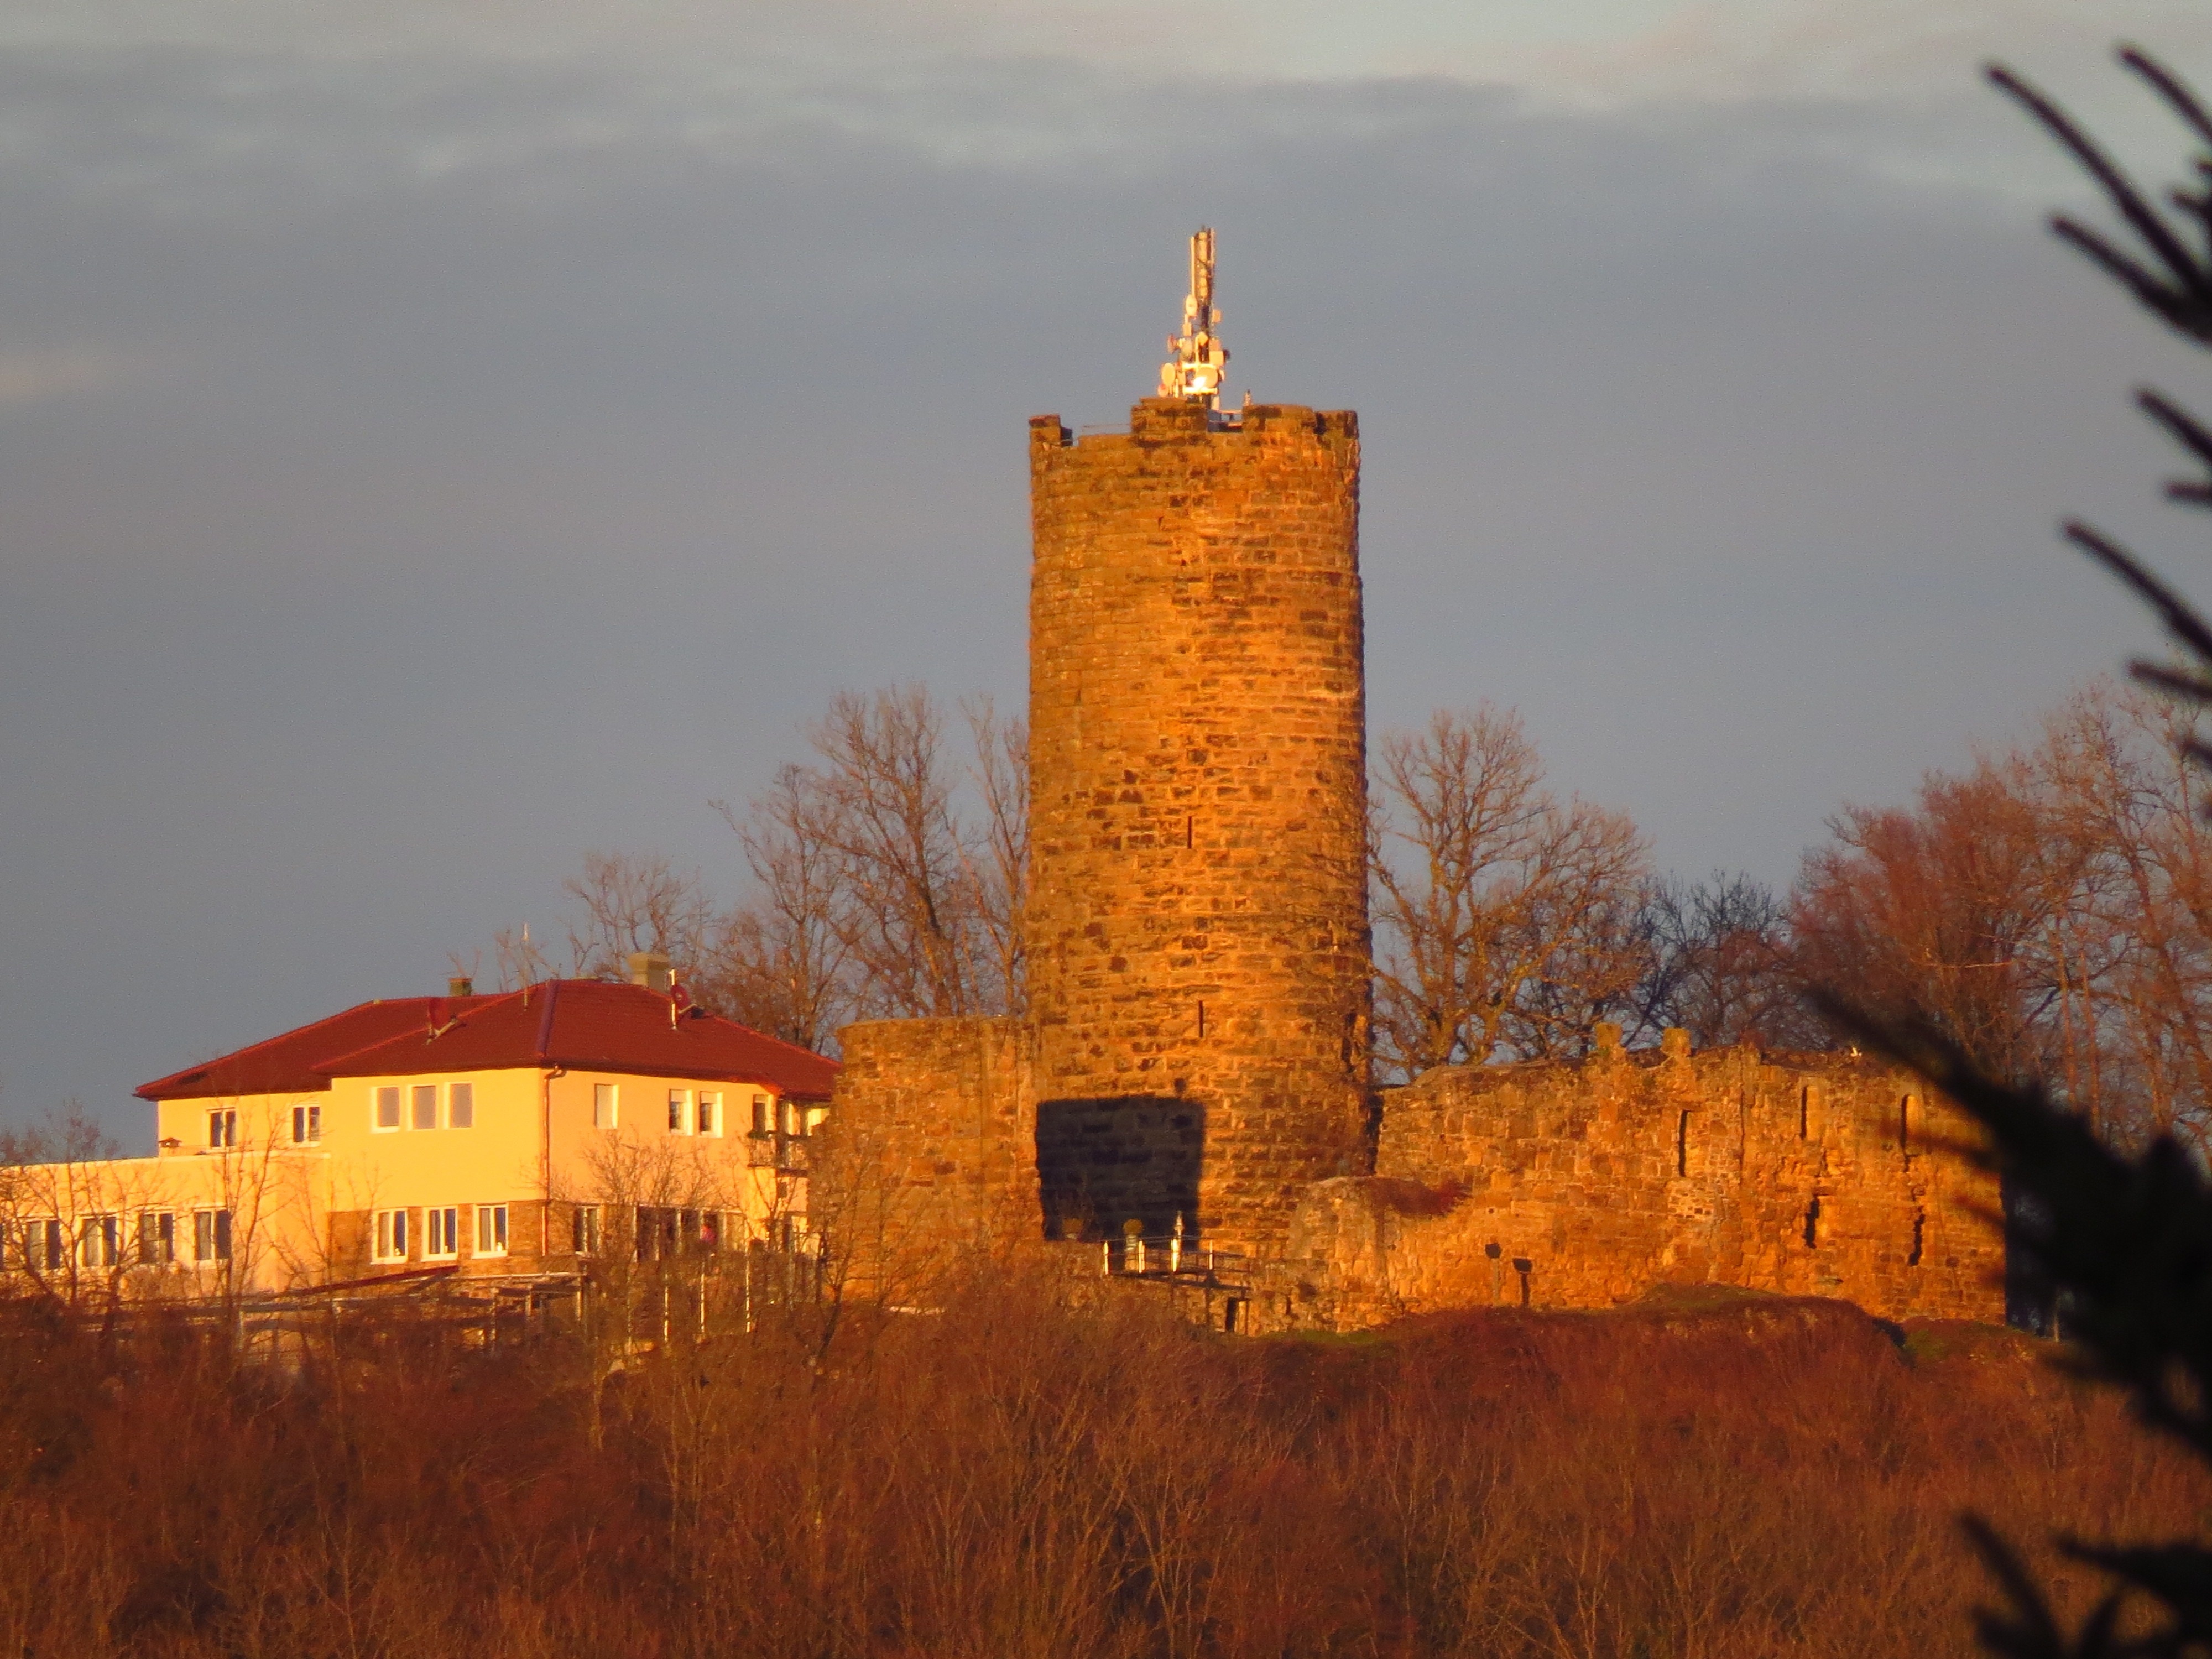 brown bricked tower